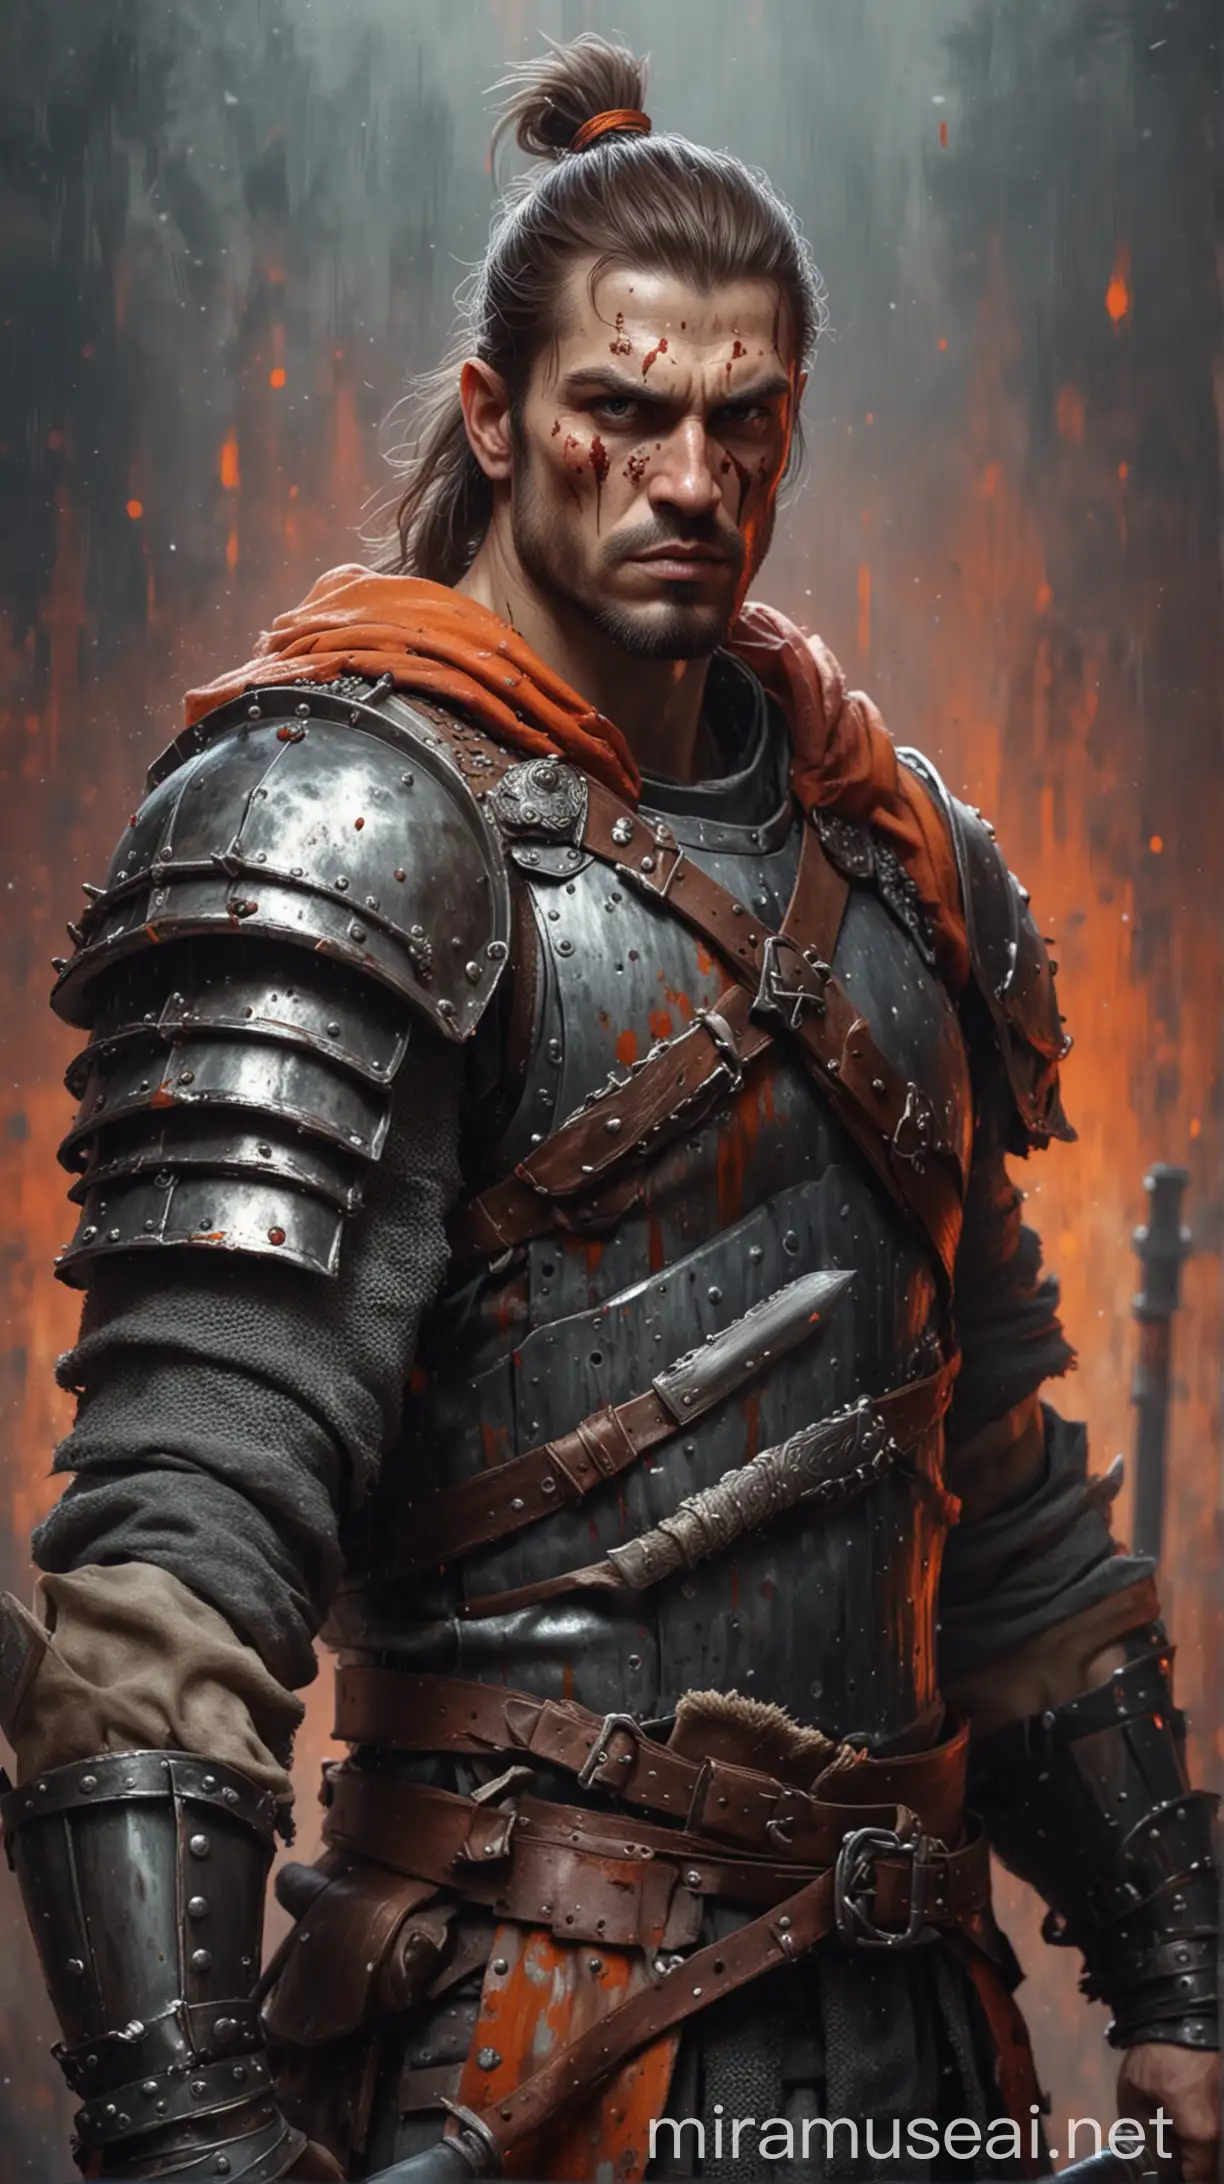 Medieval Fantasy Warrior with Steel Mallet in Cold Tones